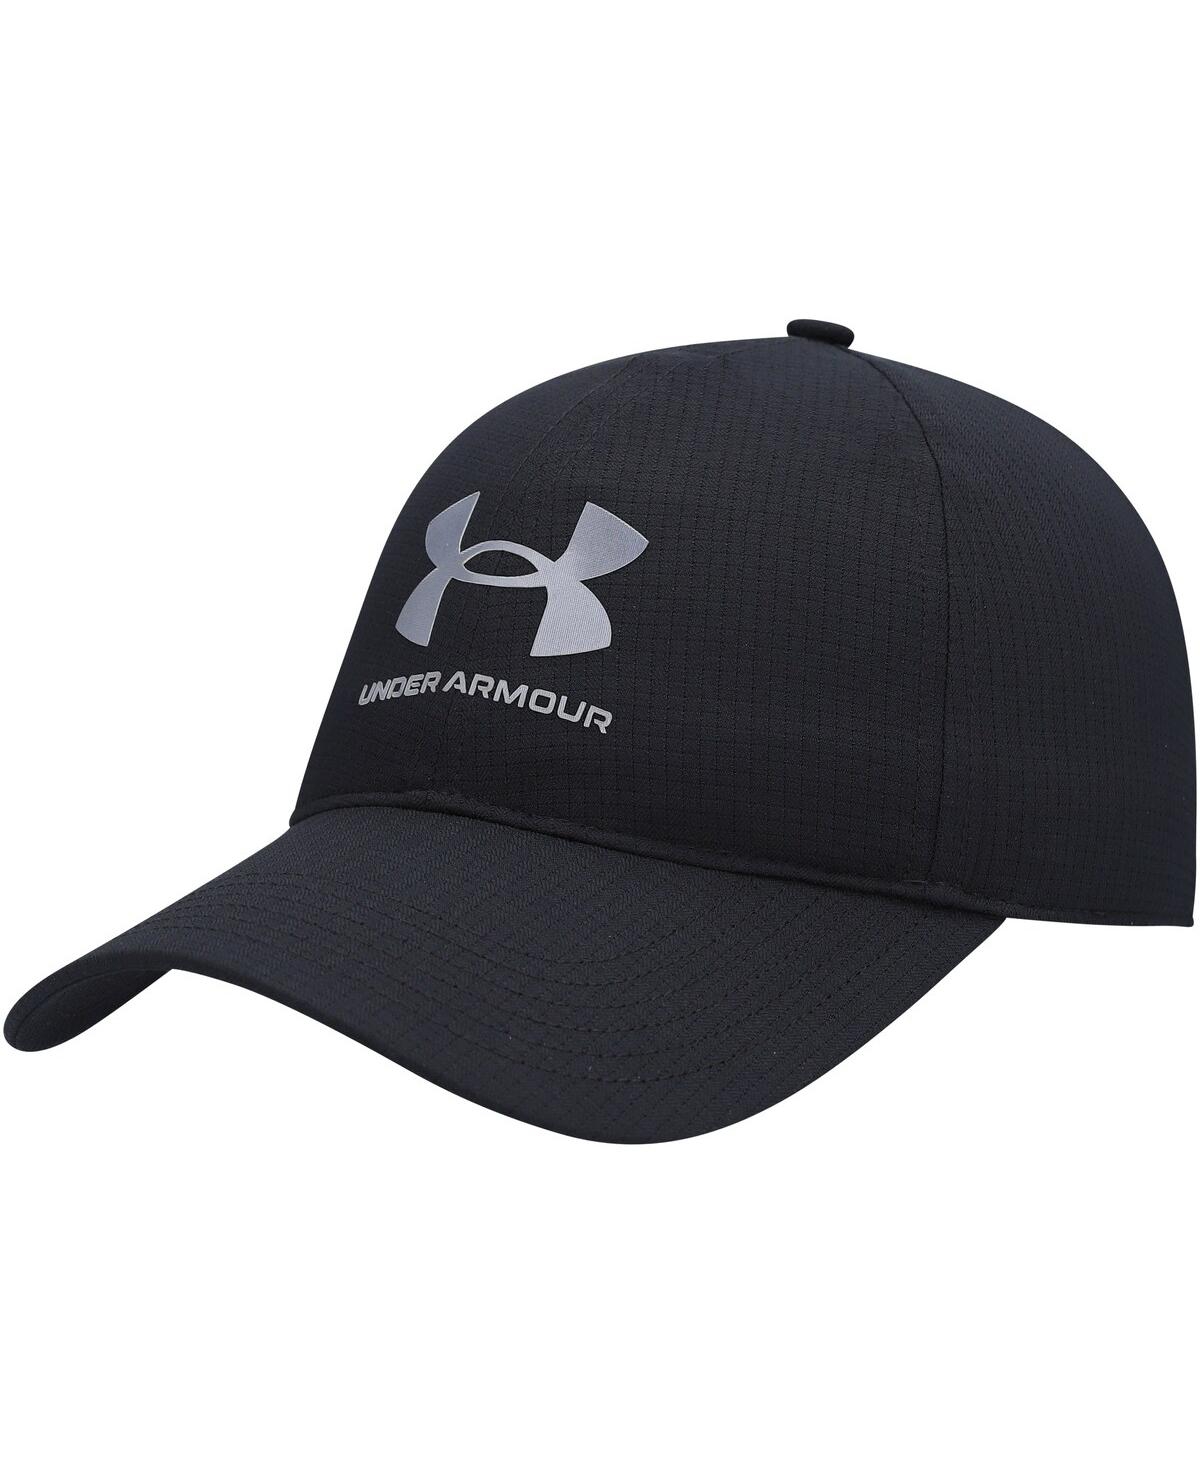 Shop Under Armour Men's  Black Performance Adjustable Hat